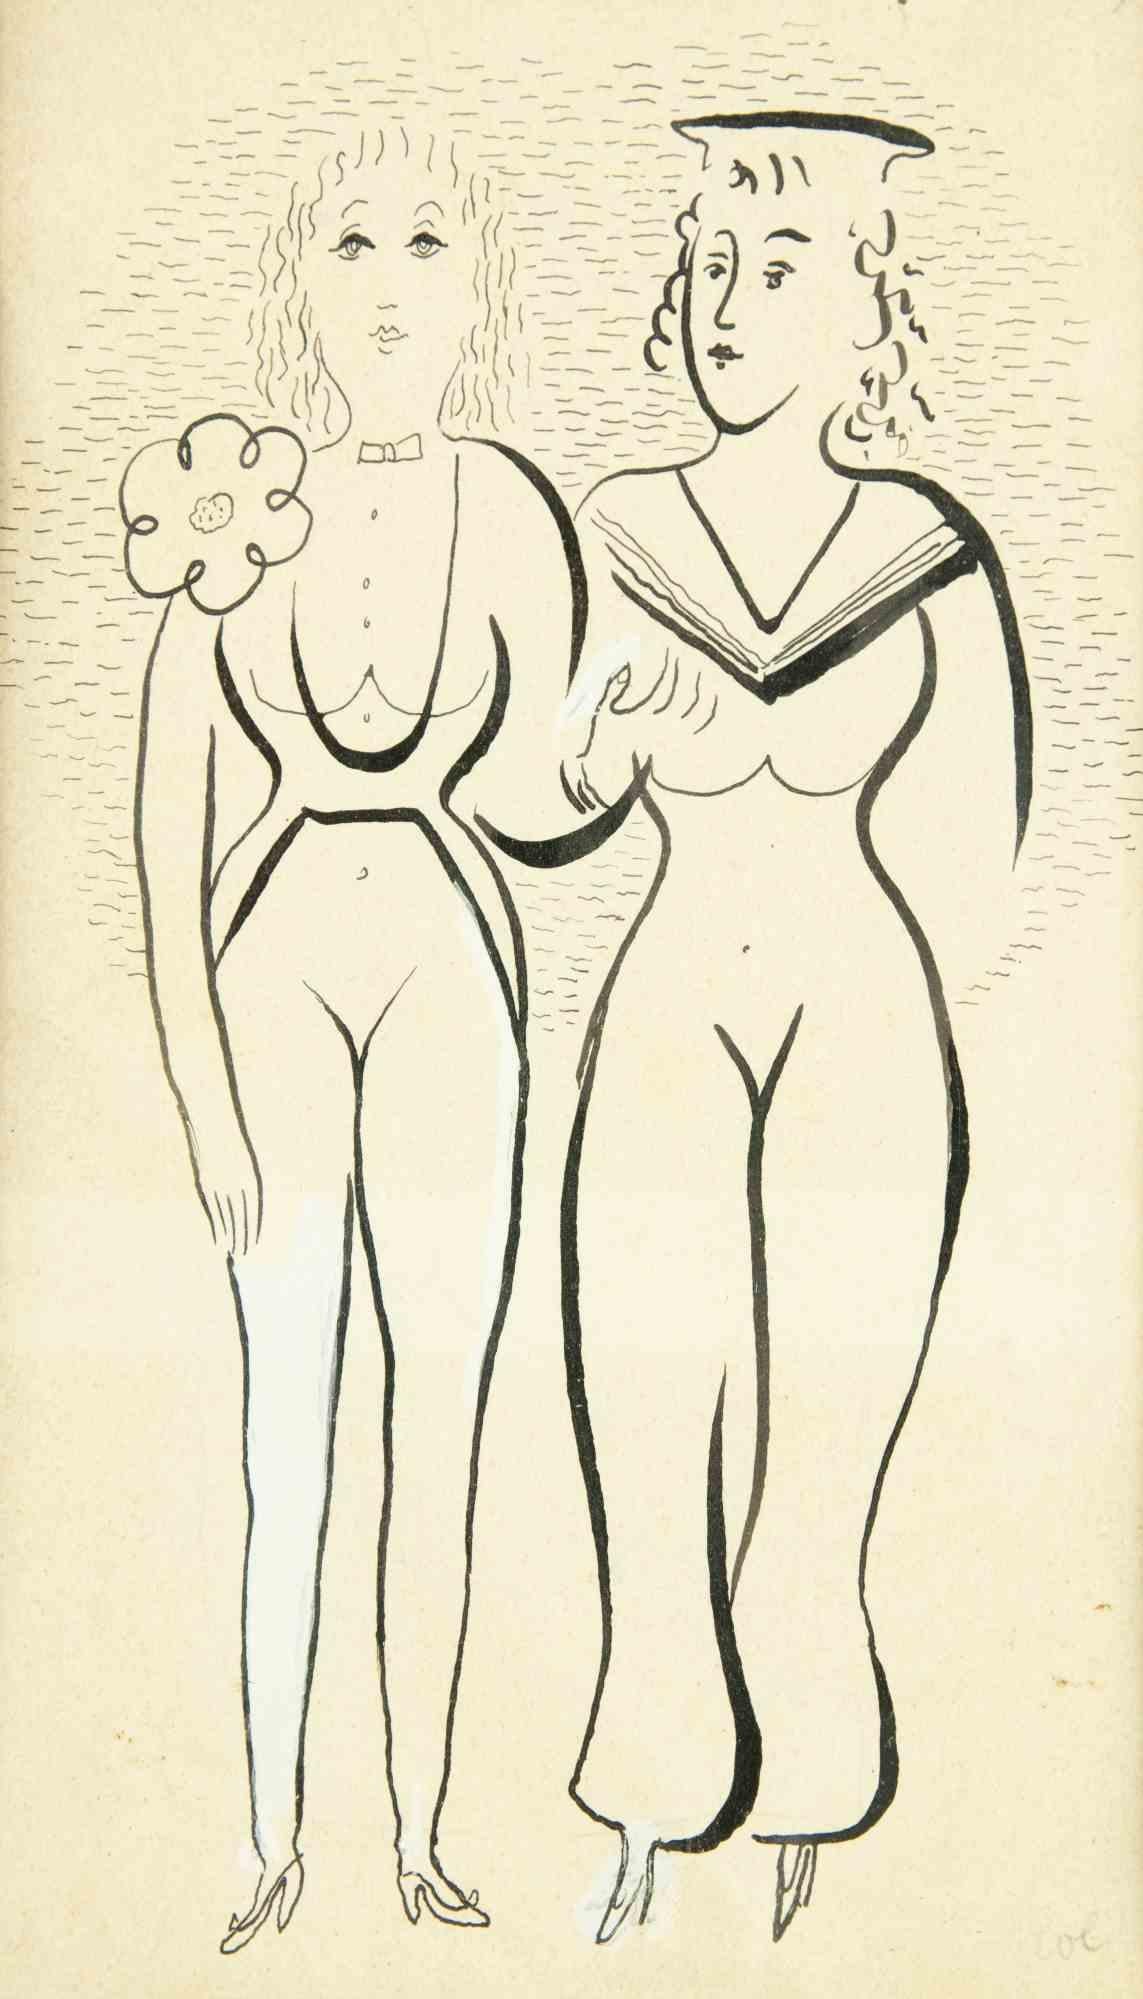 Alfredo Mezio Portrait - Two women - l Drawing by Mario Mafai - Early 20th Century